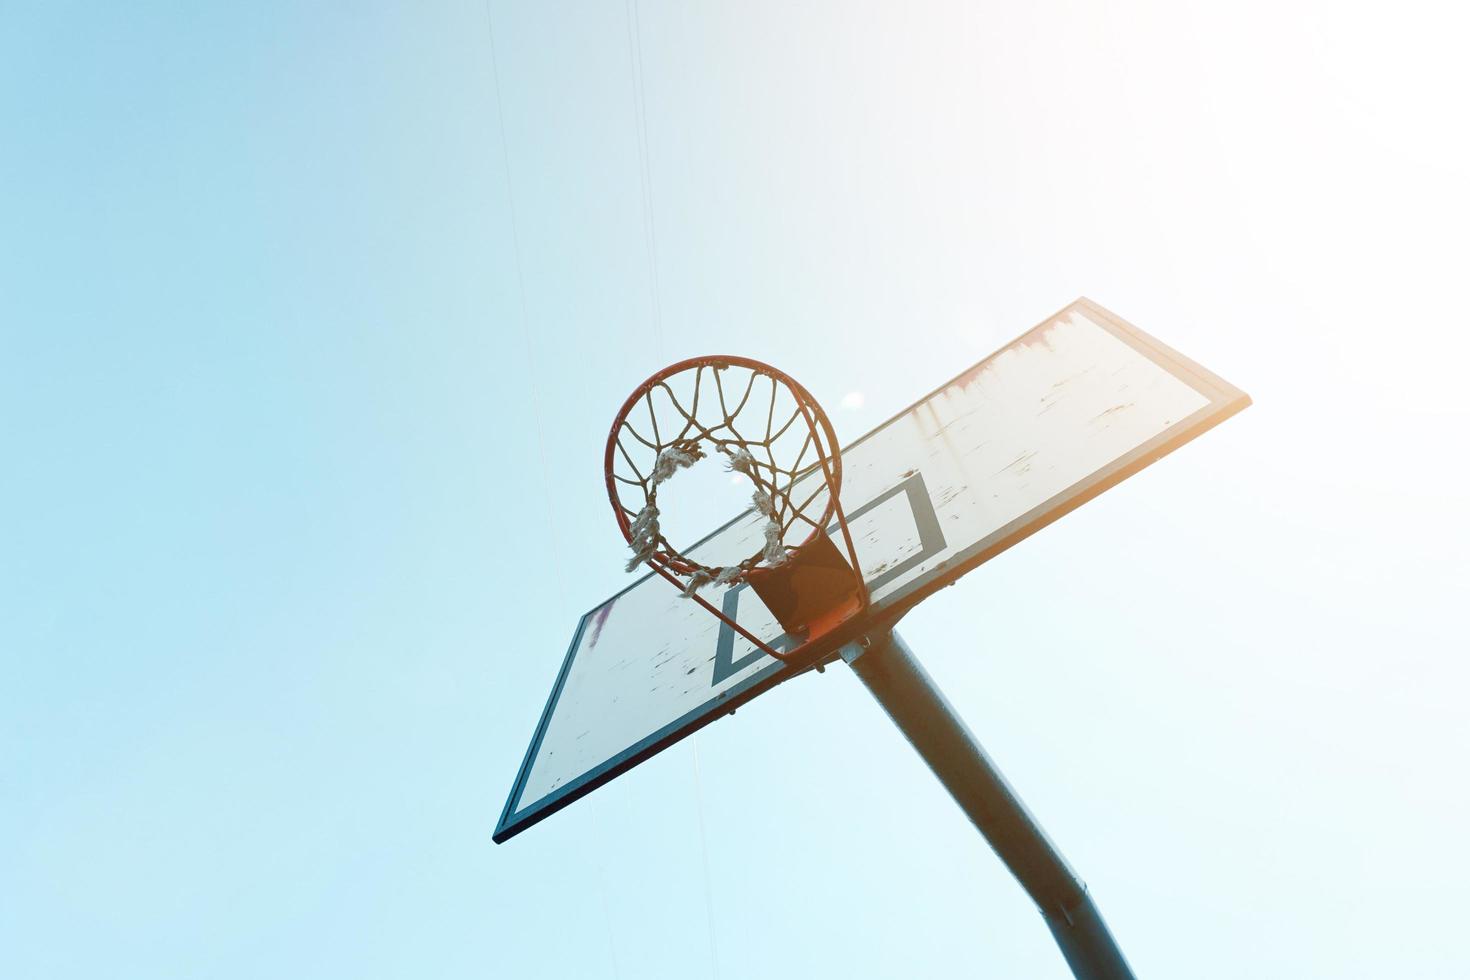 panier de basket de rue, équipement sportif photo